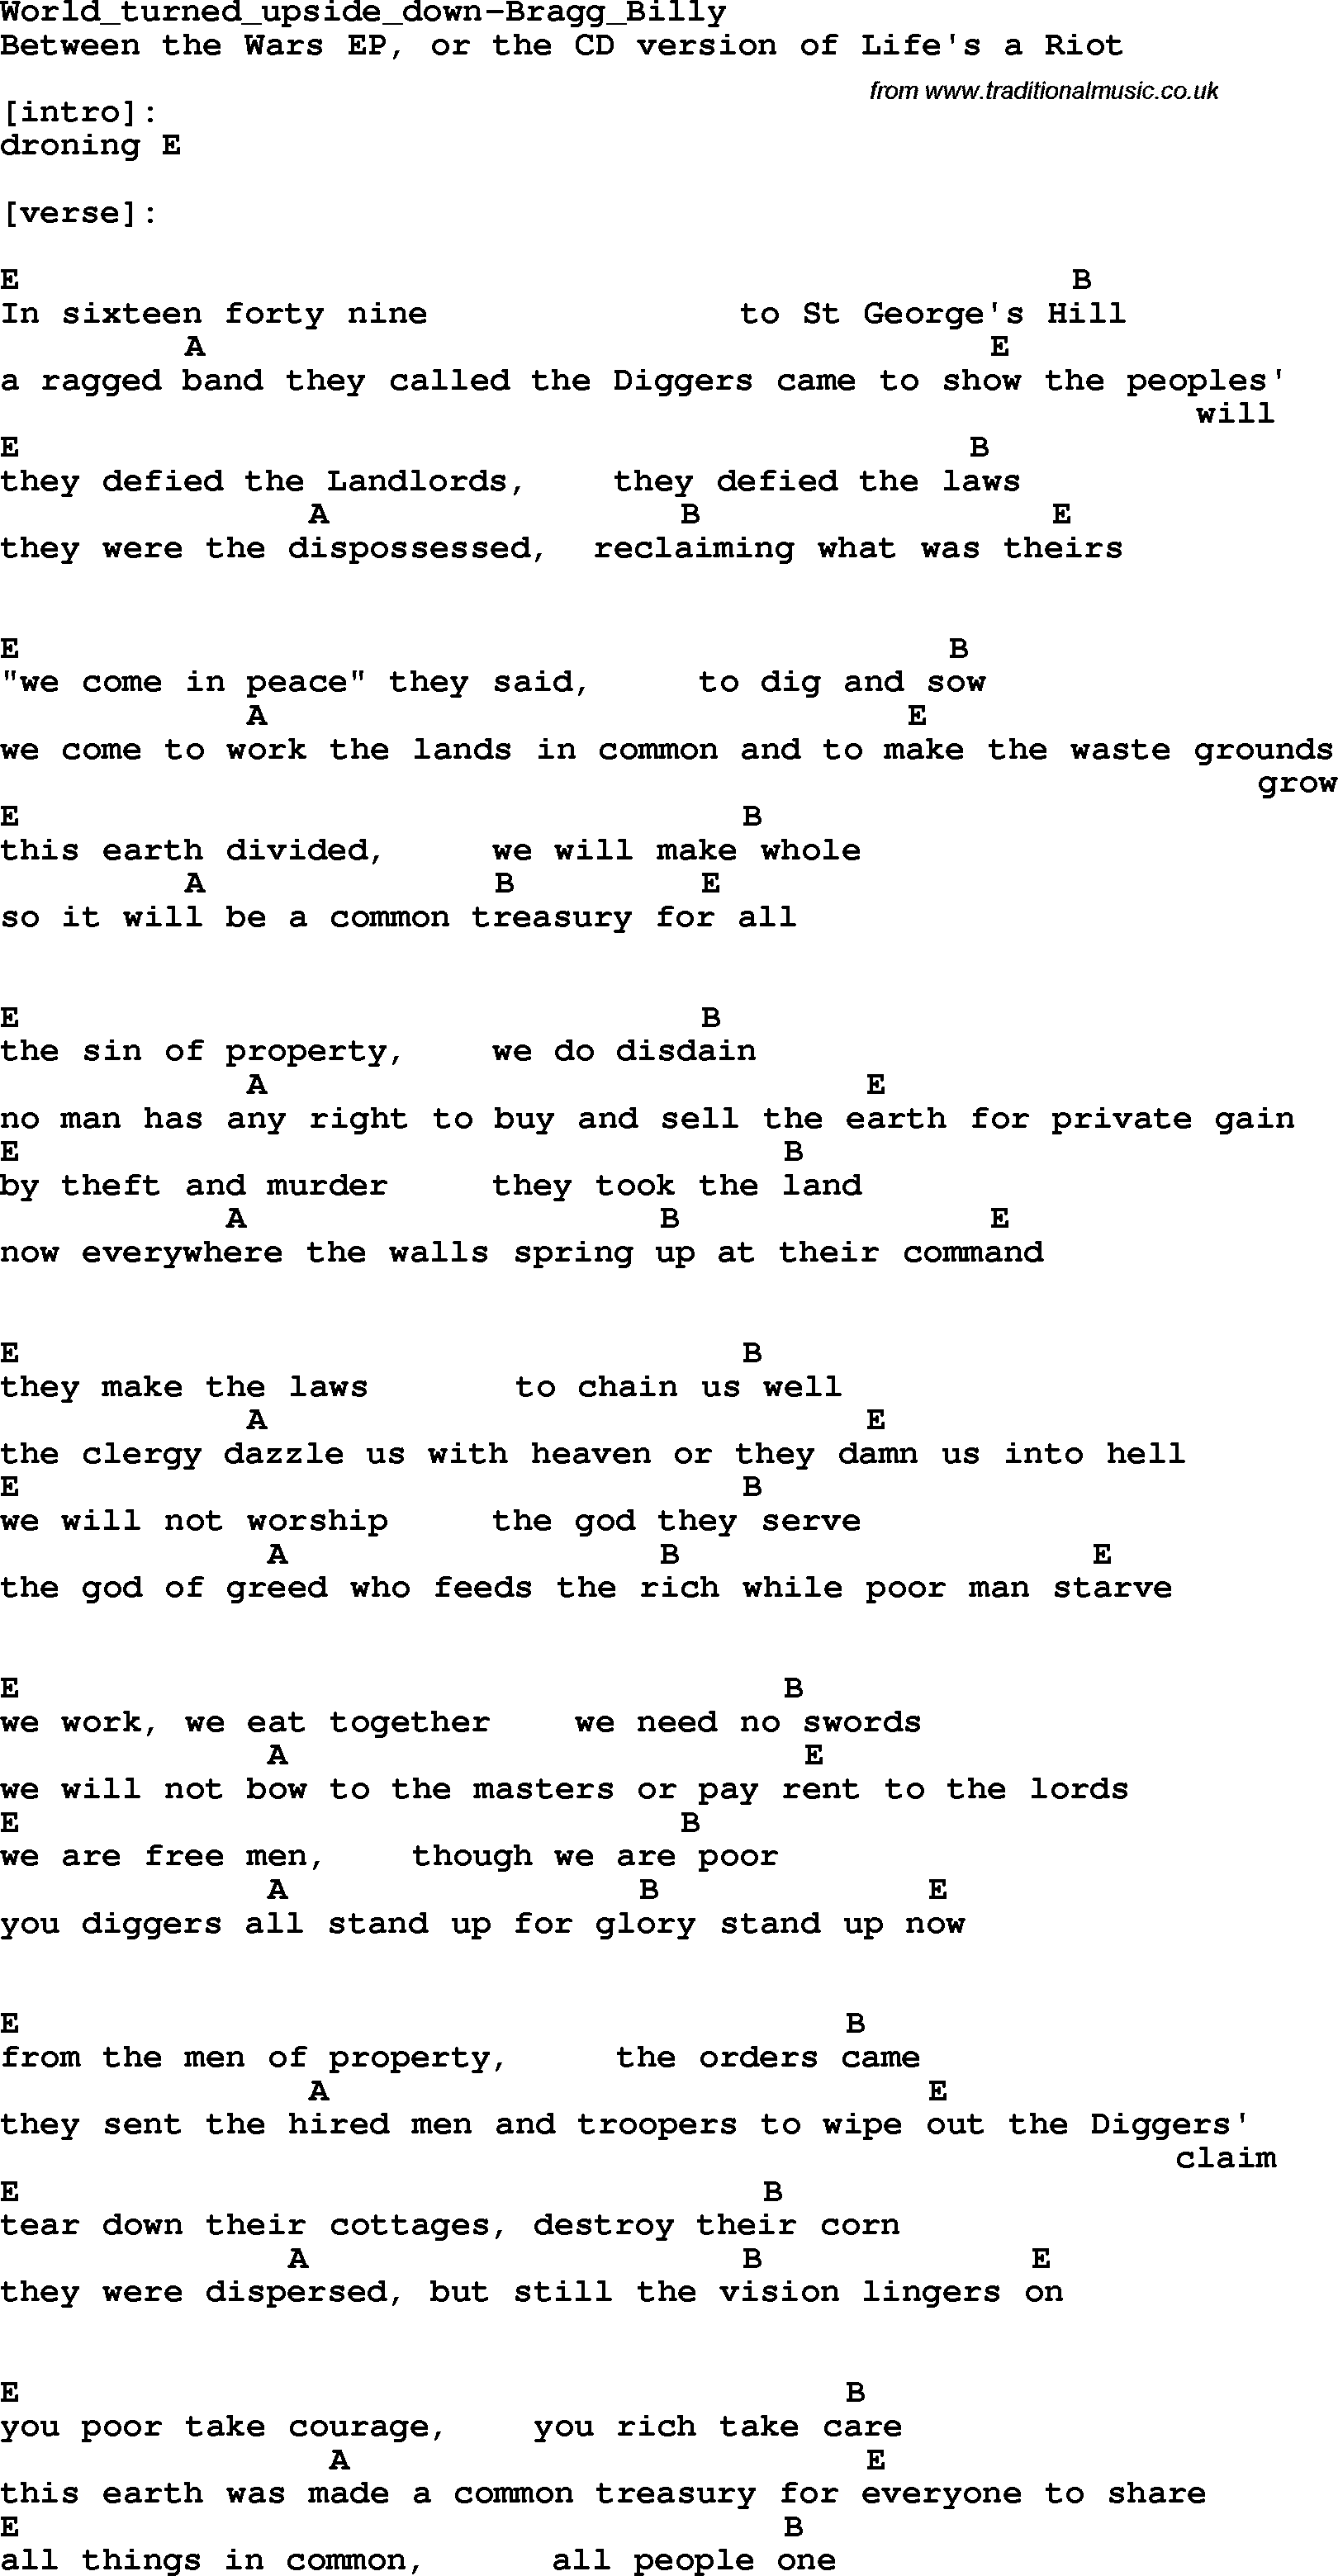 The world turned upside down lyrics